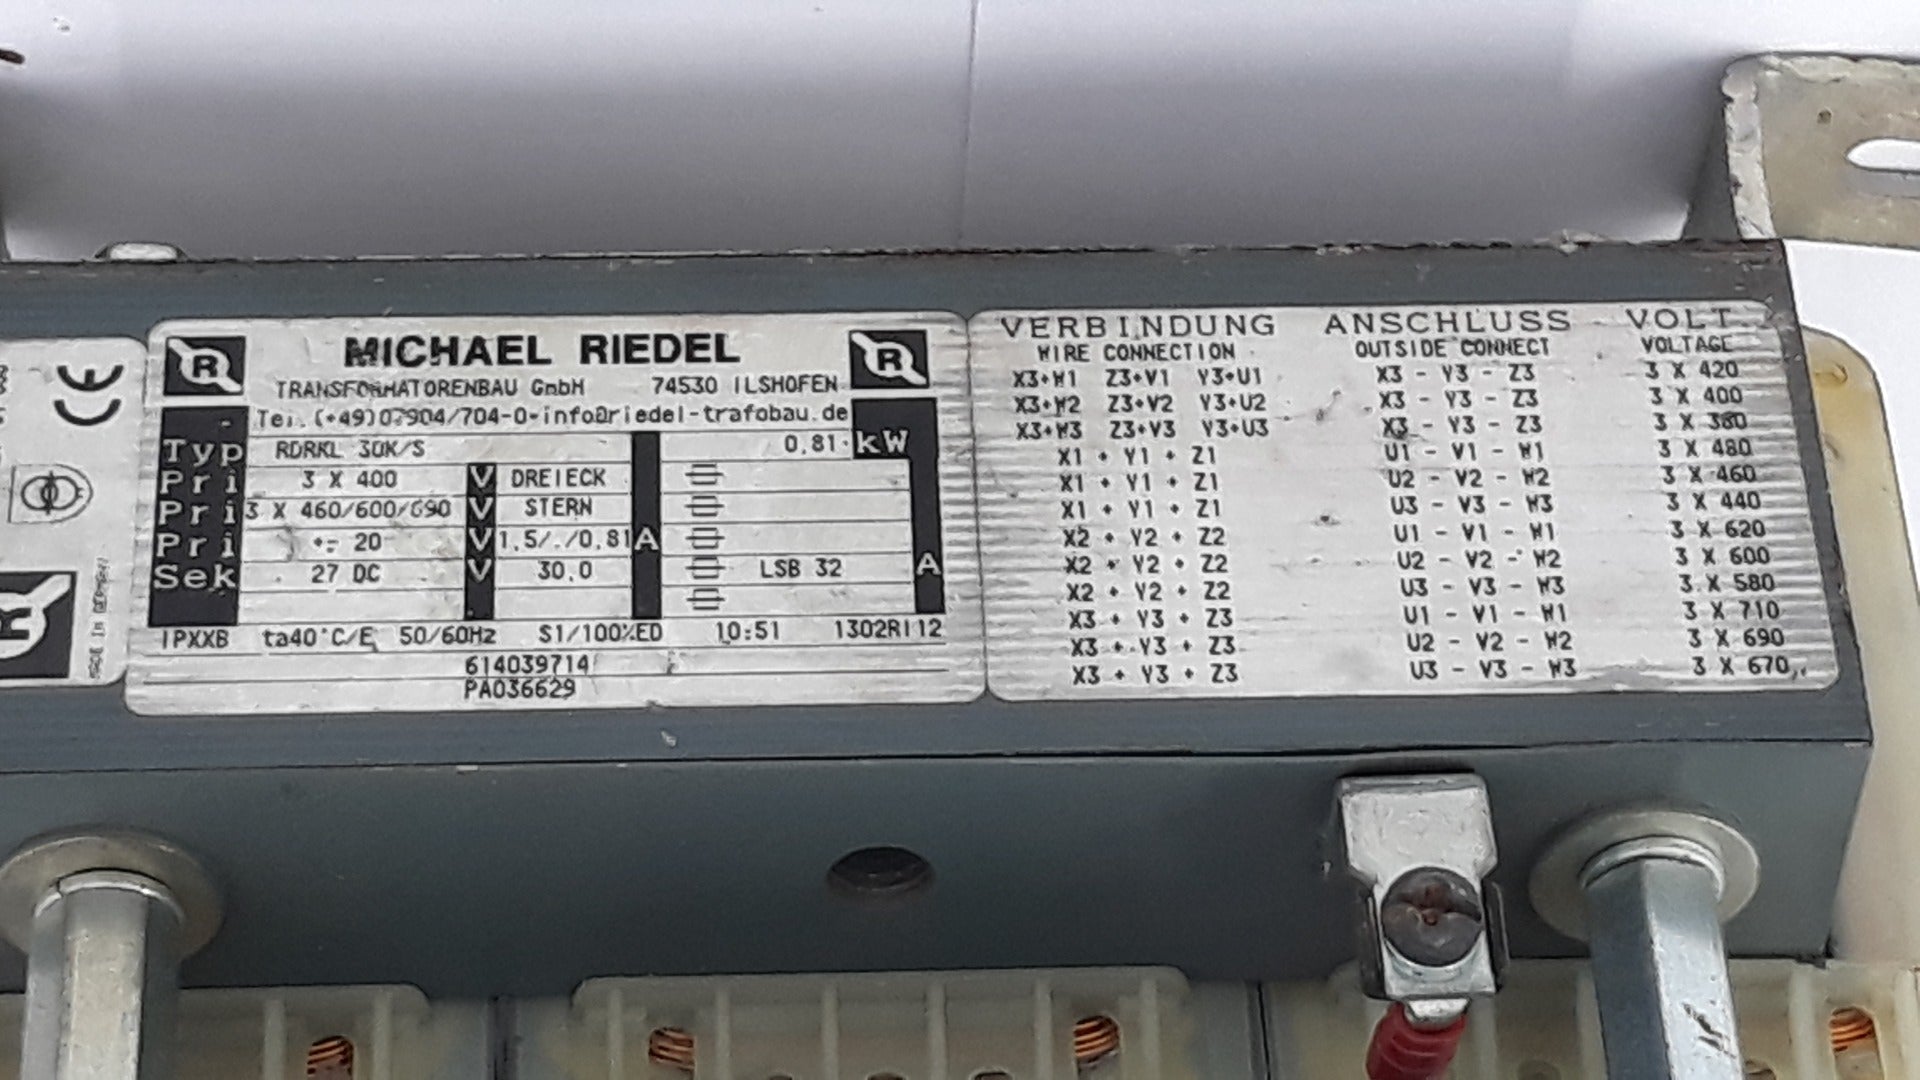 Michael Riedel Rdrkl 30K/S Transformer